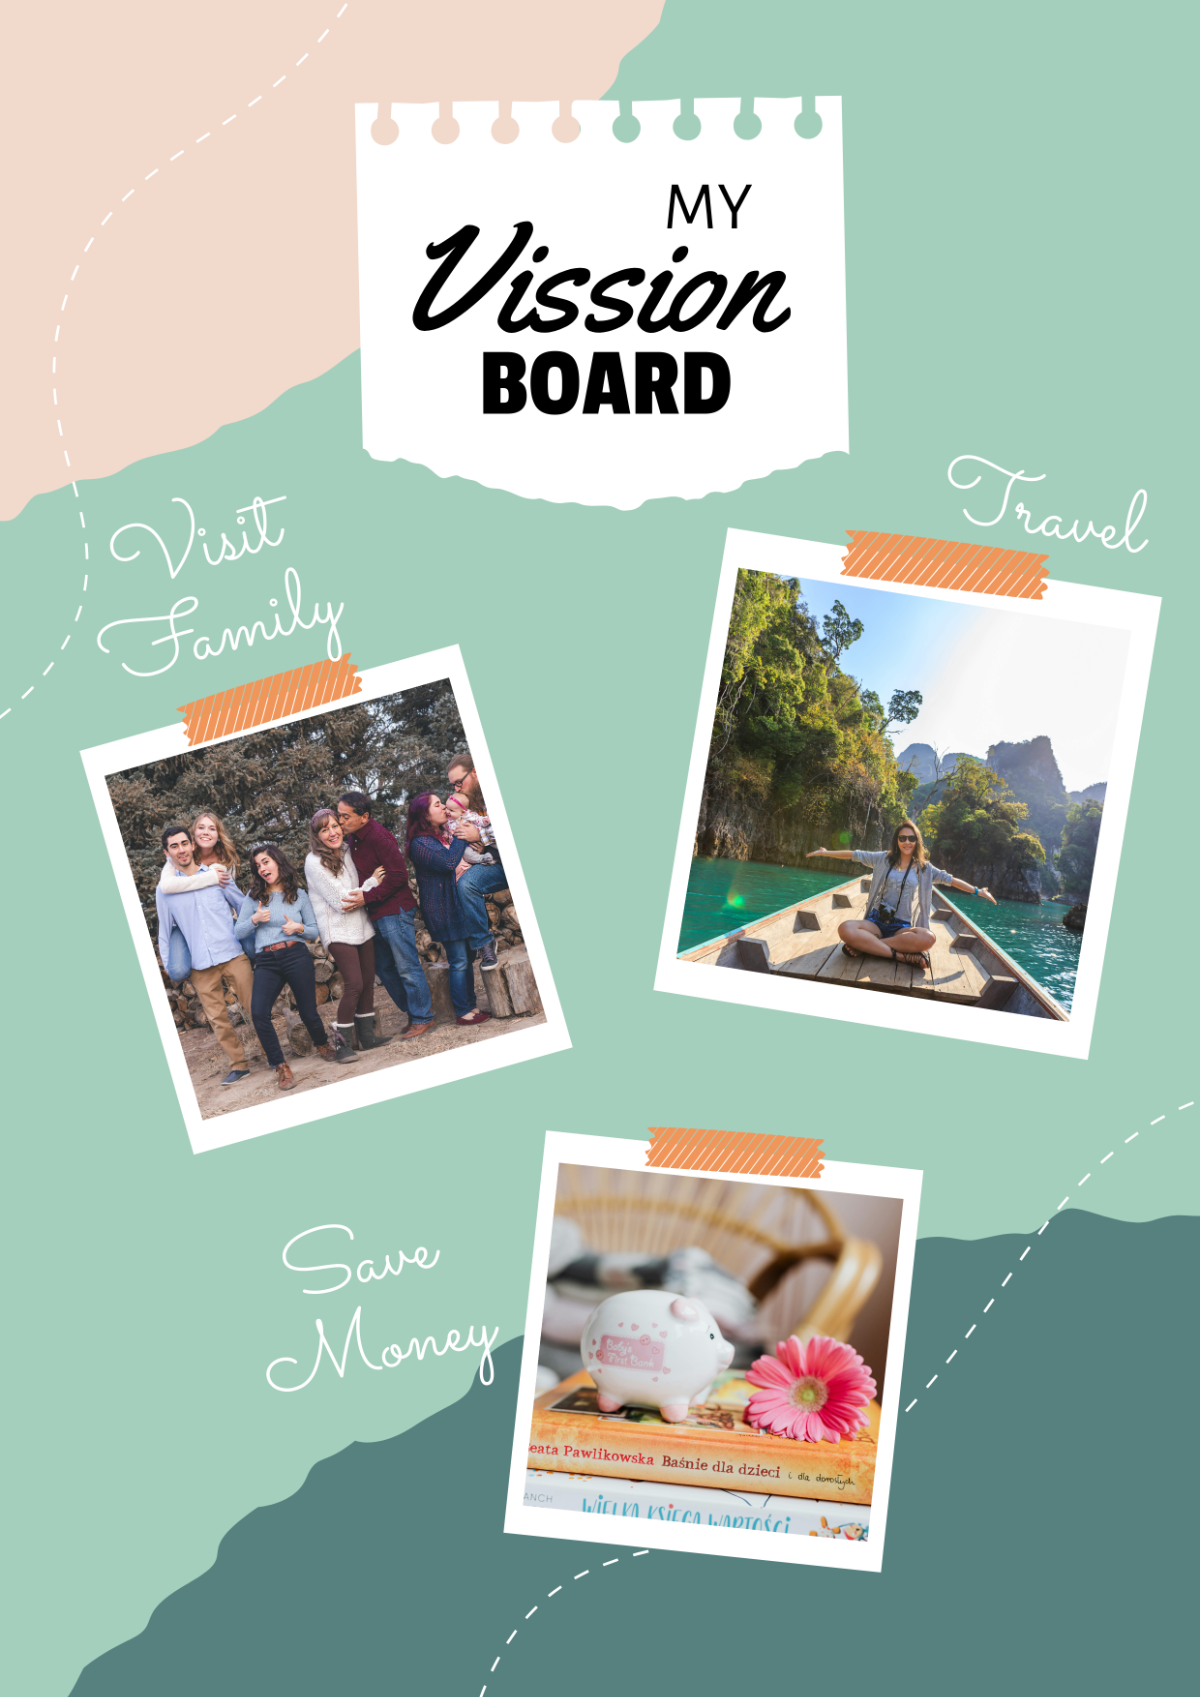 Vision Board Photo Collage